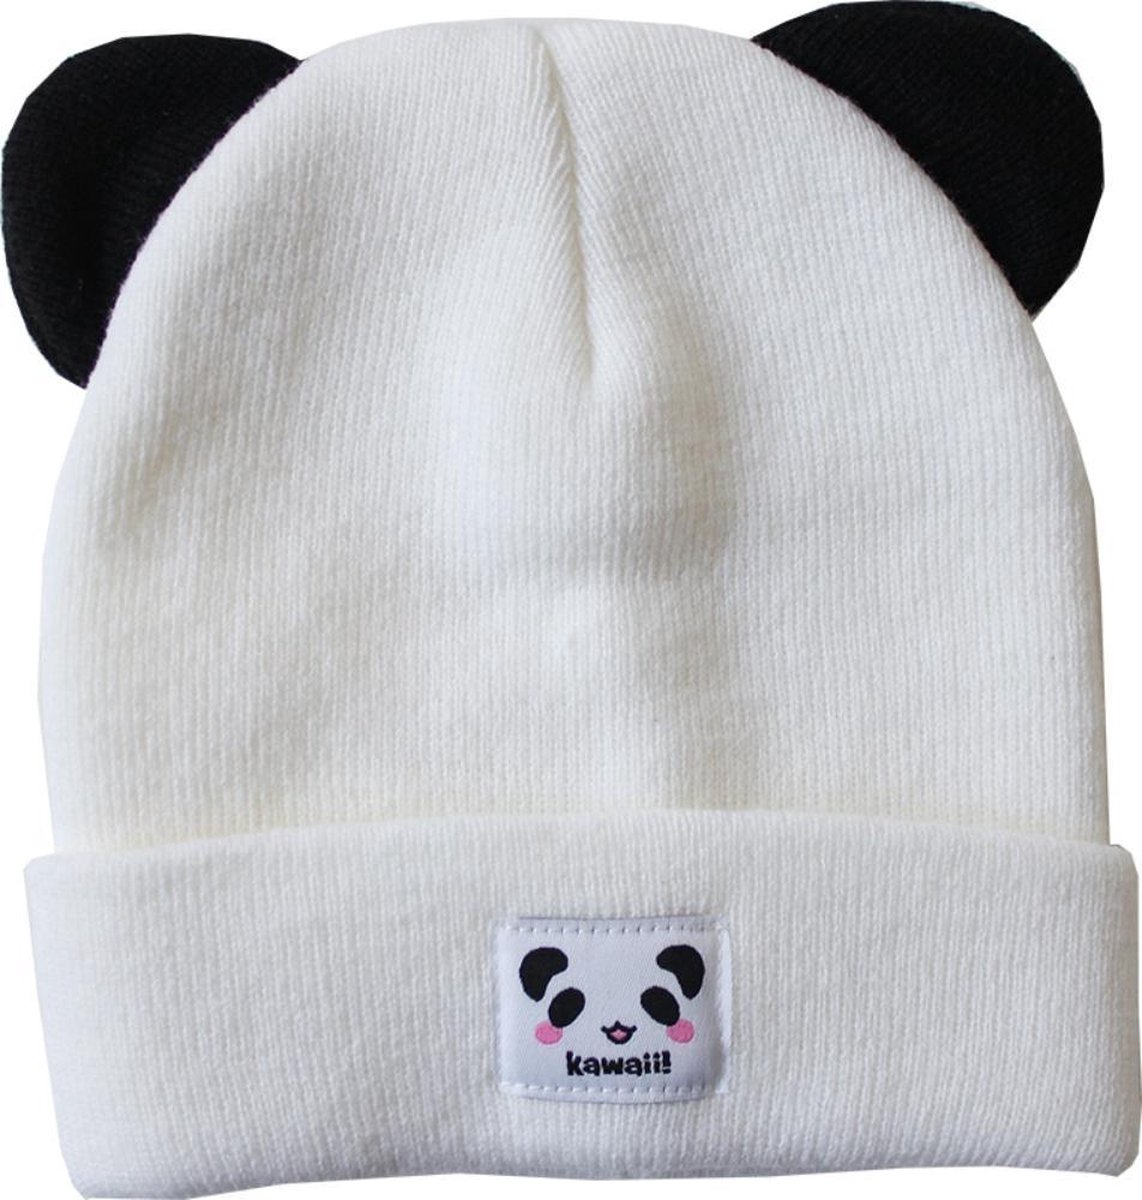 Kawaii Panda Muts Ear Beanie - Wit / Zwart Muts met oortjes - Design MostCutest